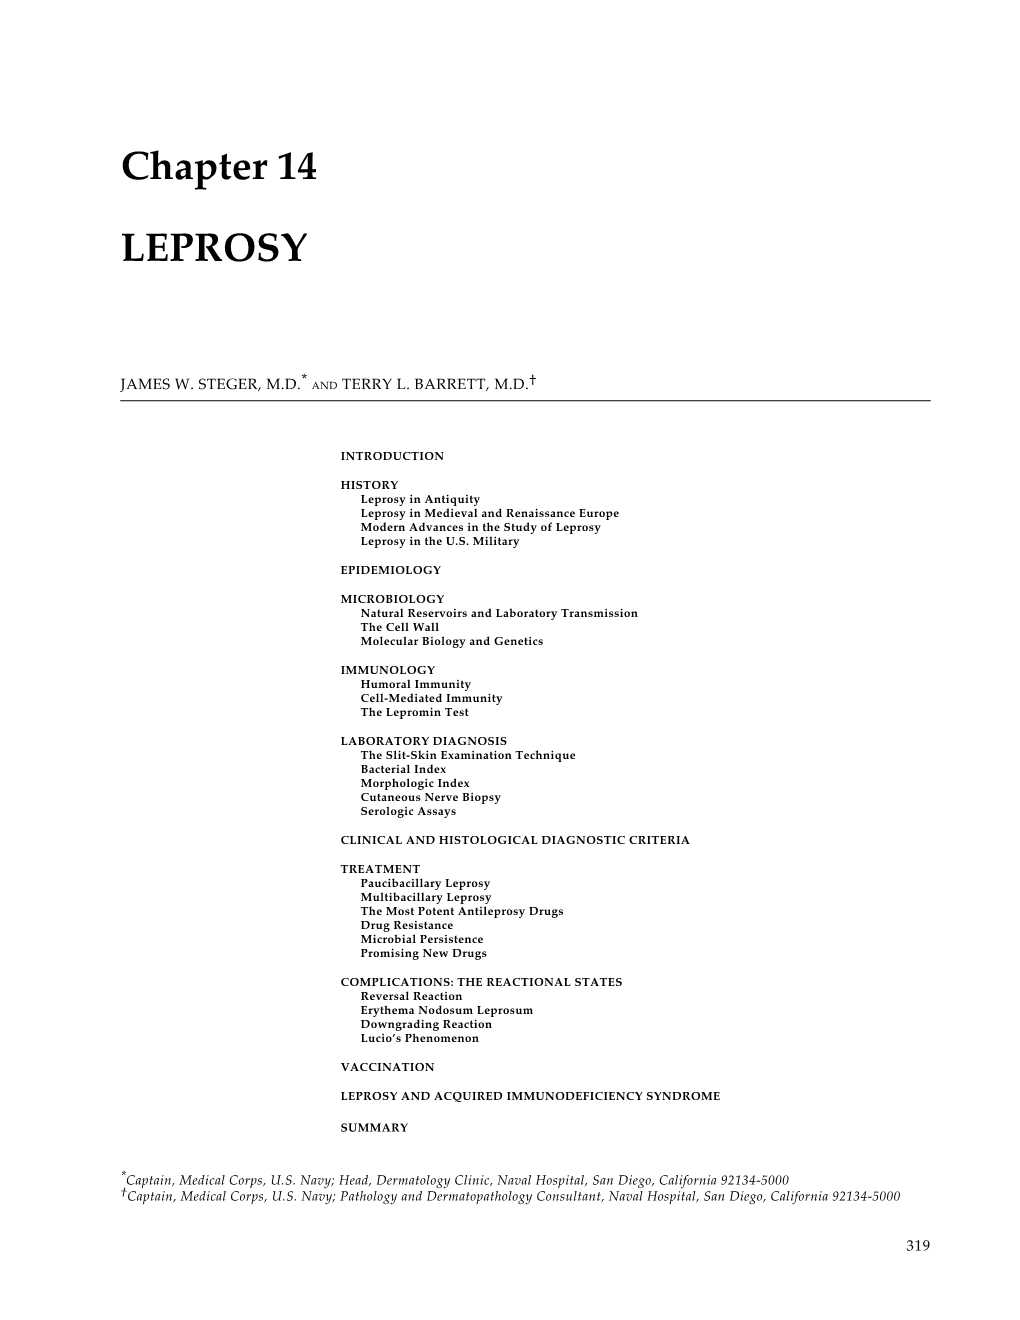 Military Dermatology, Chapter 14, Leprosy